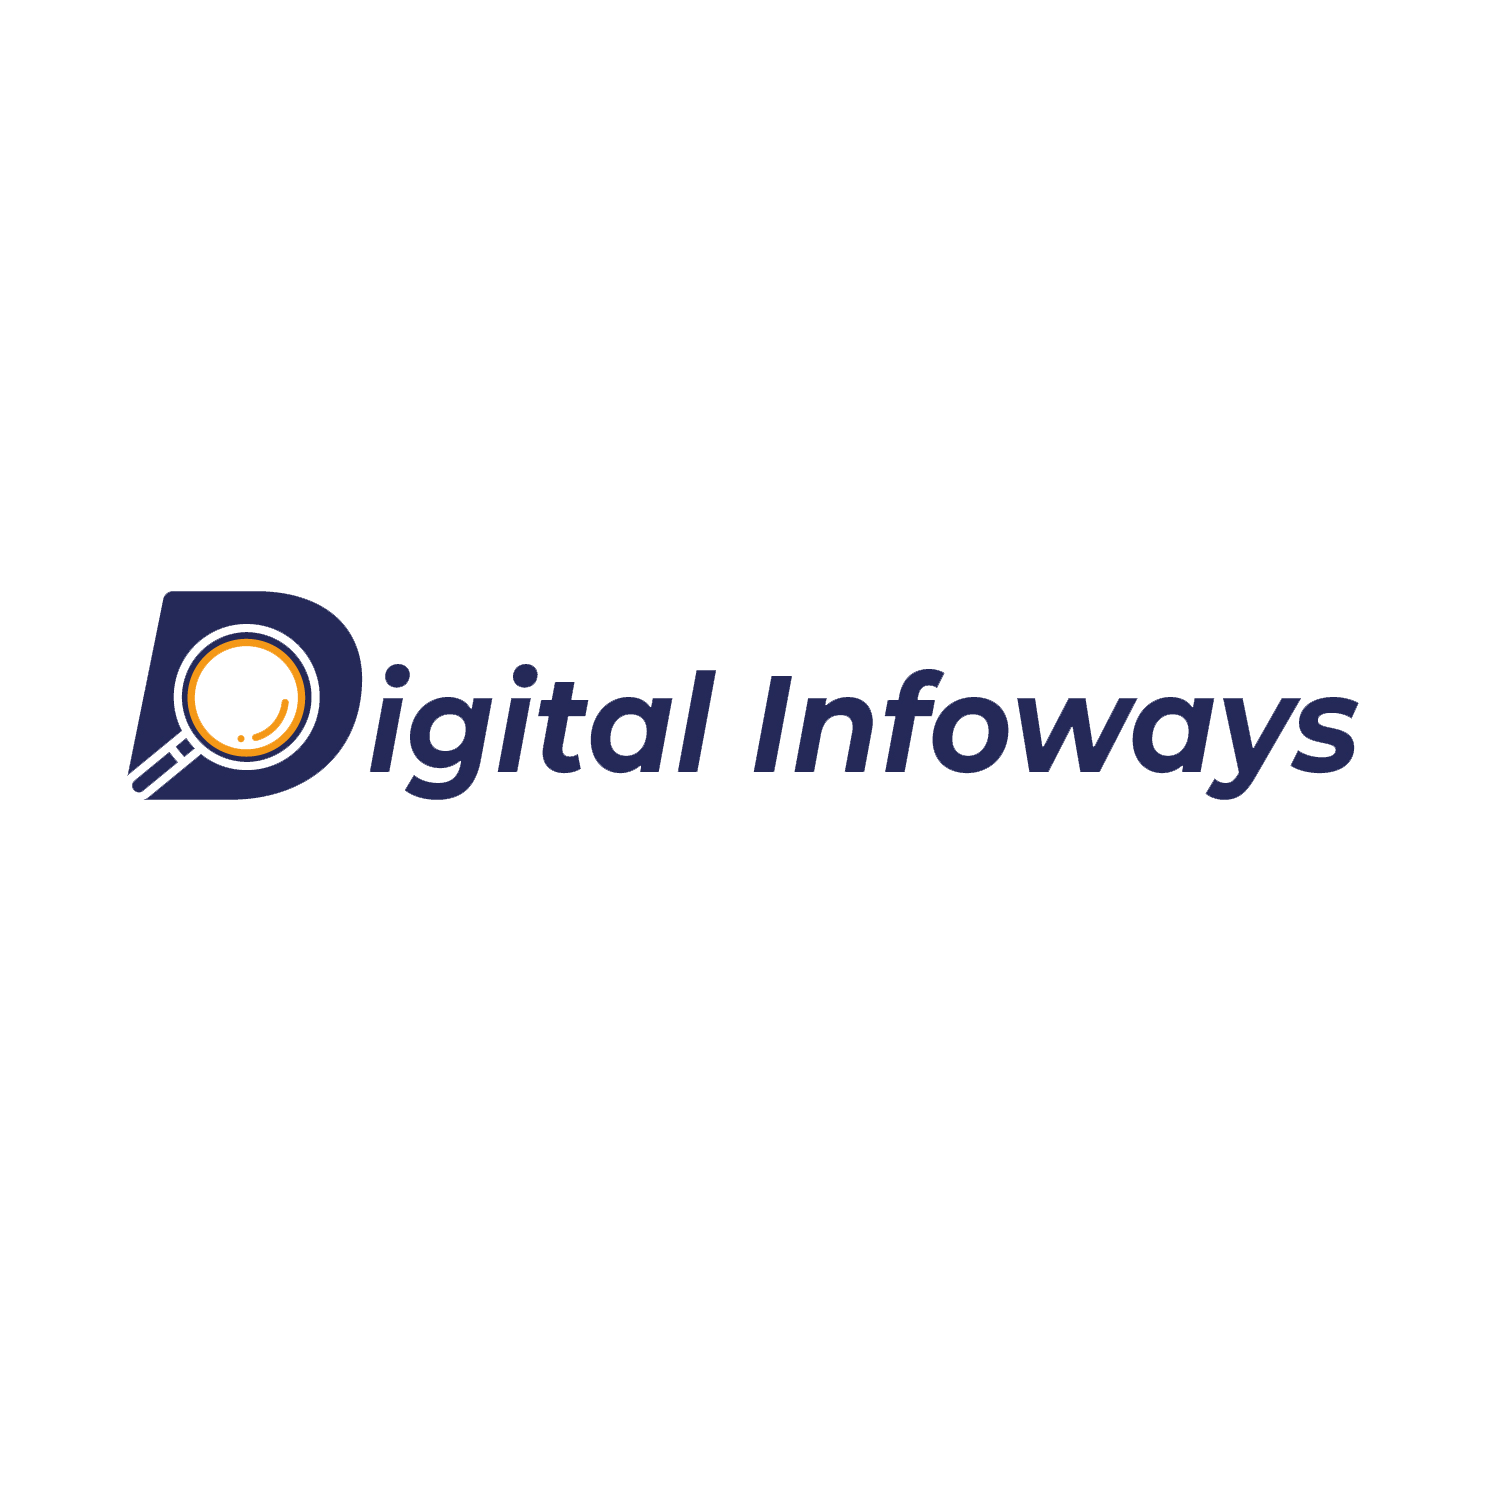 Digital Infoways logo